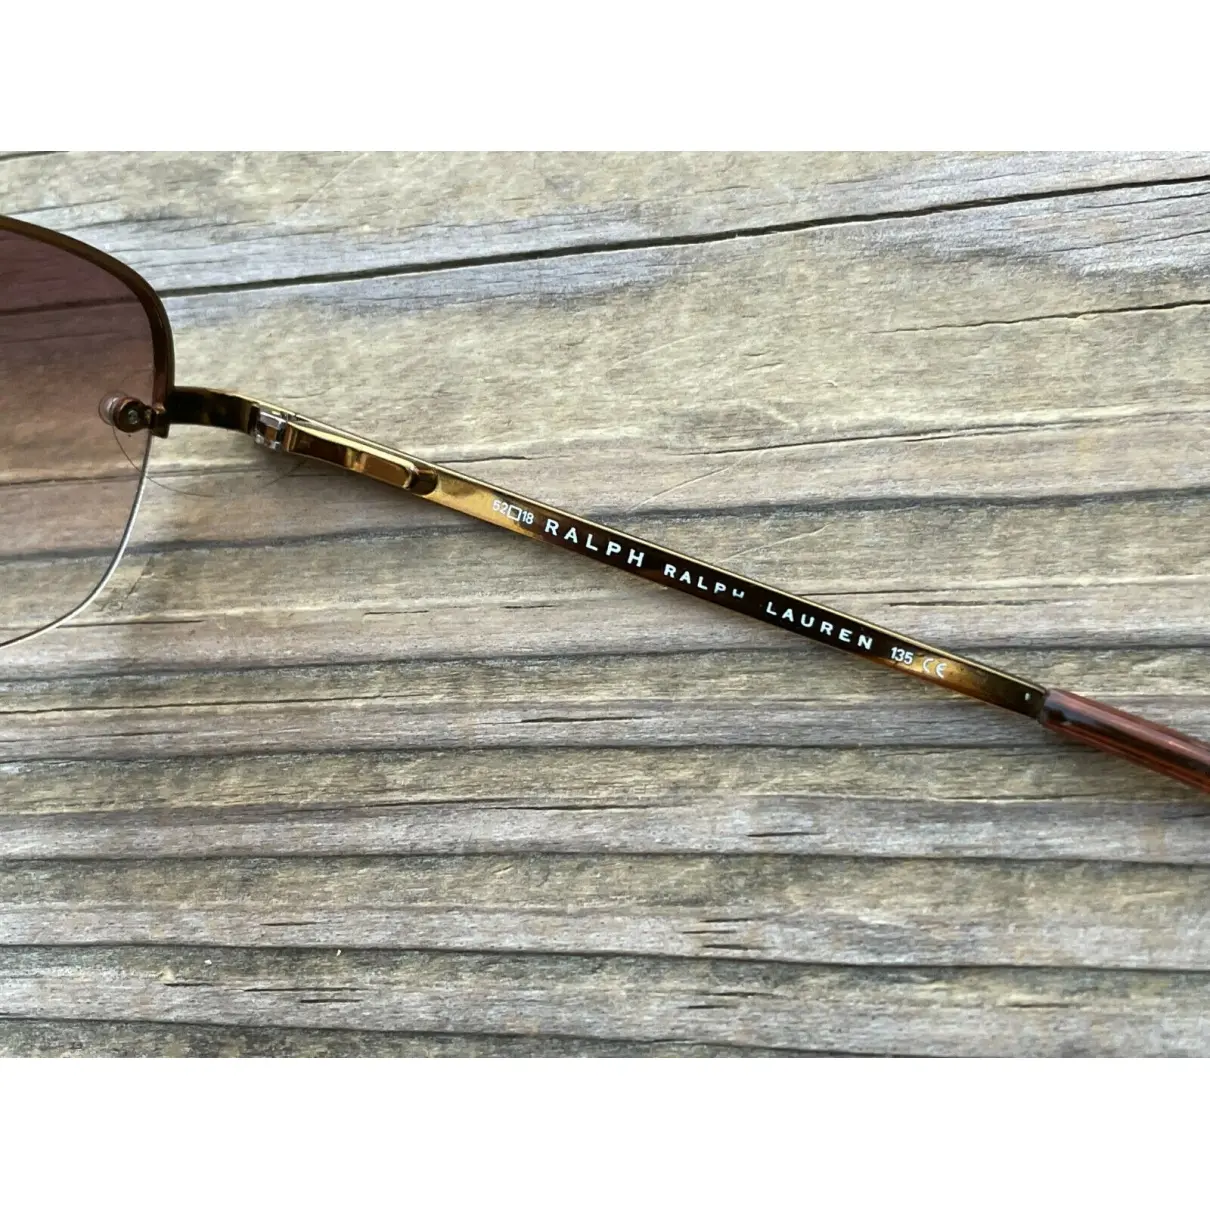 Oversized sunglasses Ralph Lauren